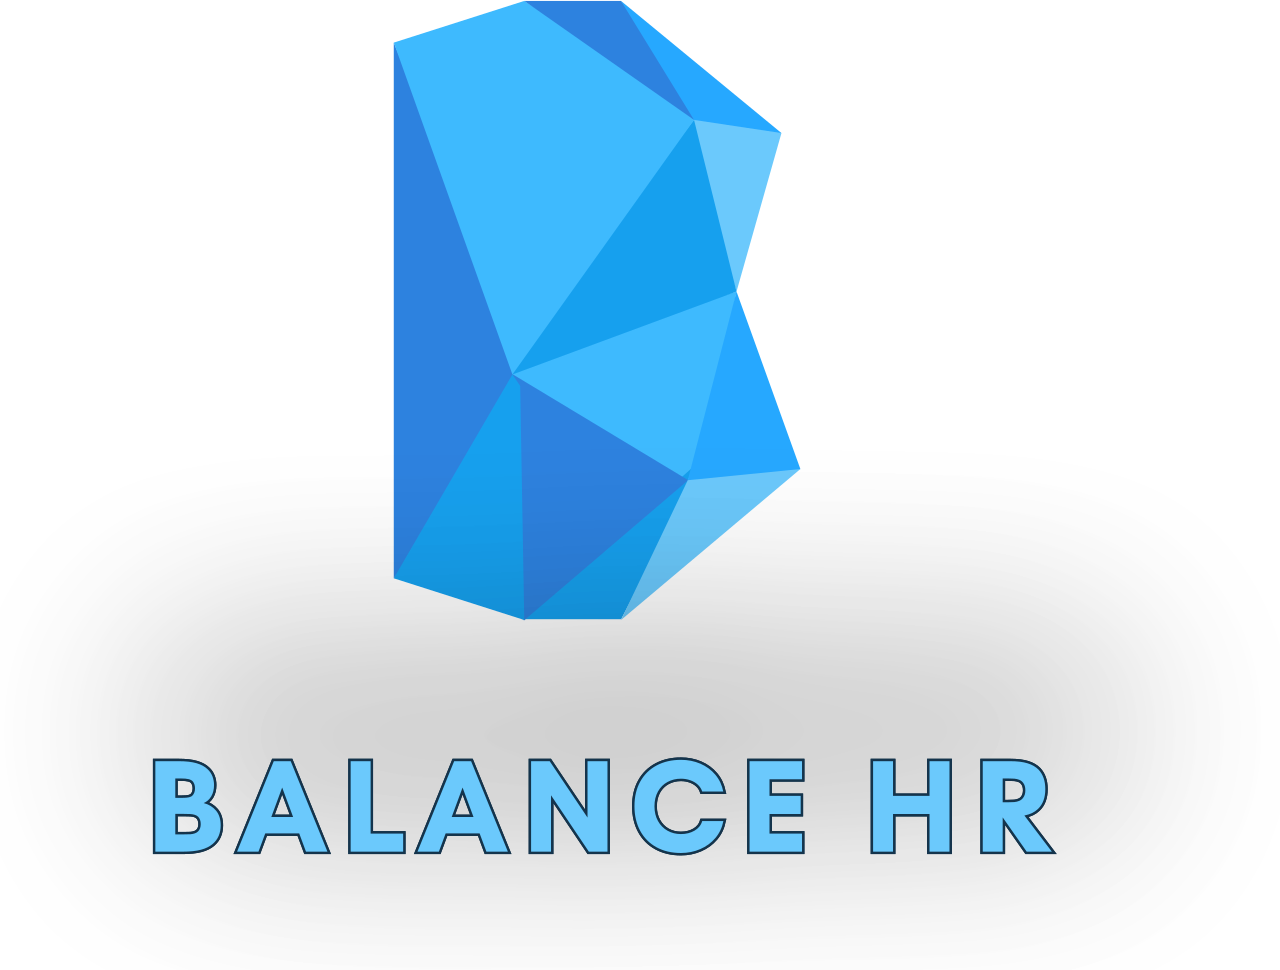 BALANCE HR's web page